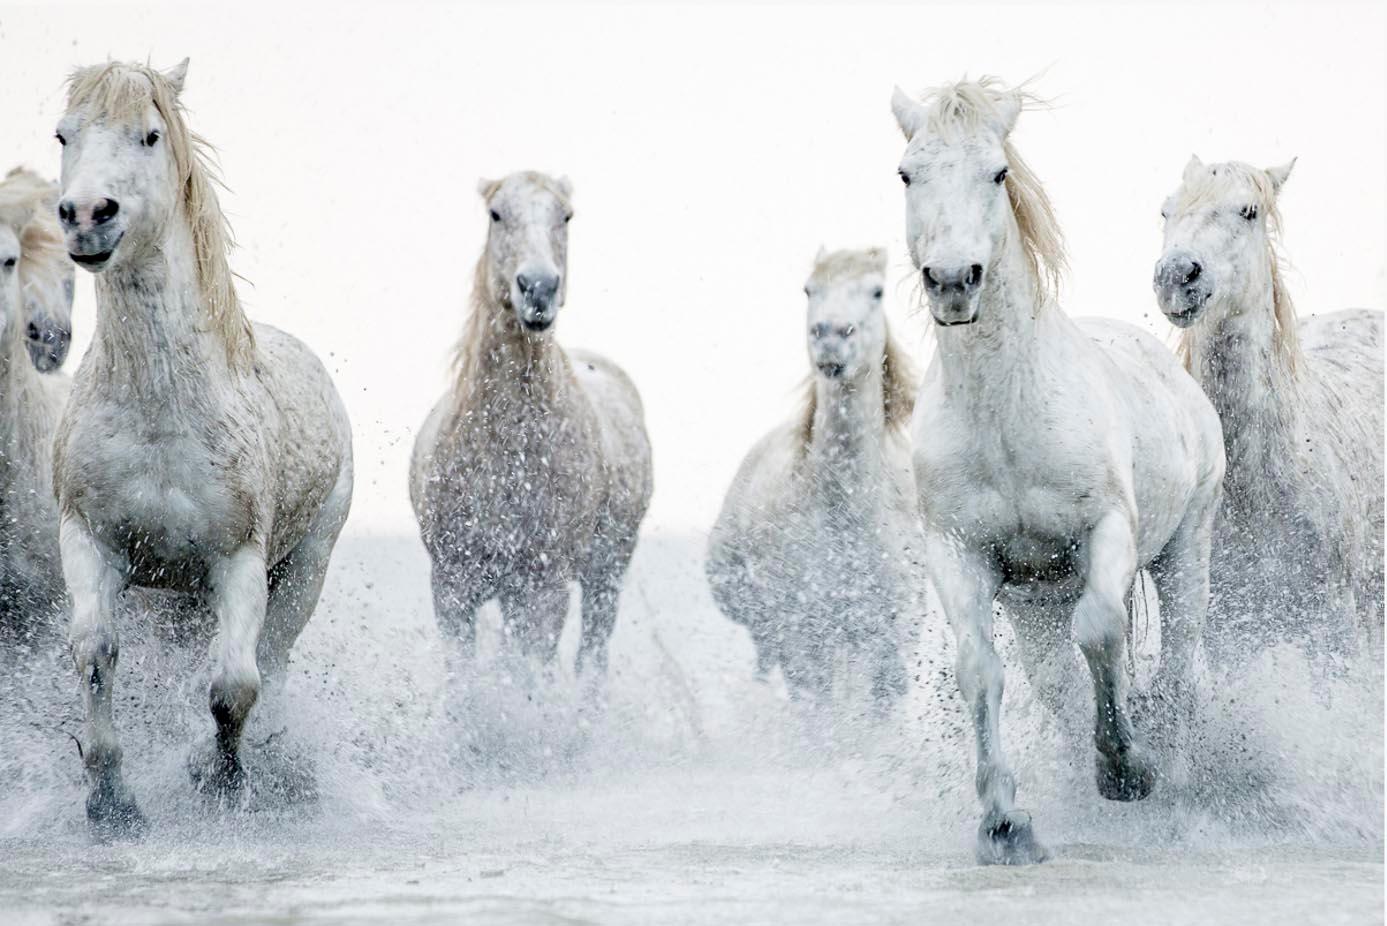 Tori Gagne Black and White Photograph - "Esprit Sauvage" Contemporary Wild Horse Photograph, 32" x 48"